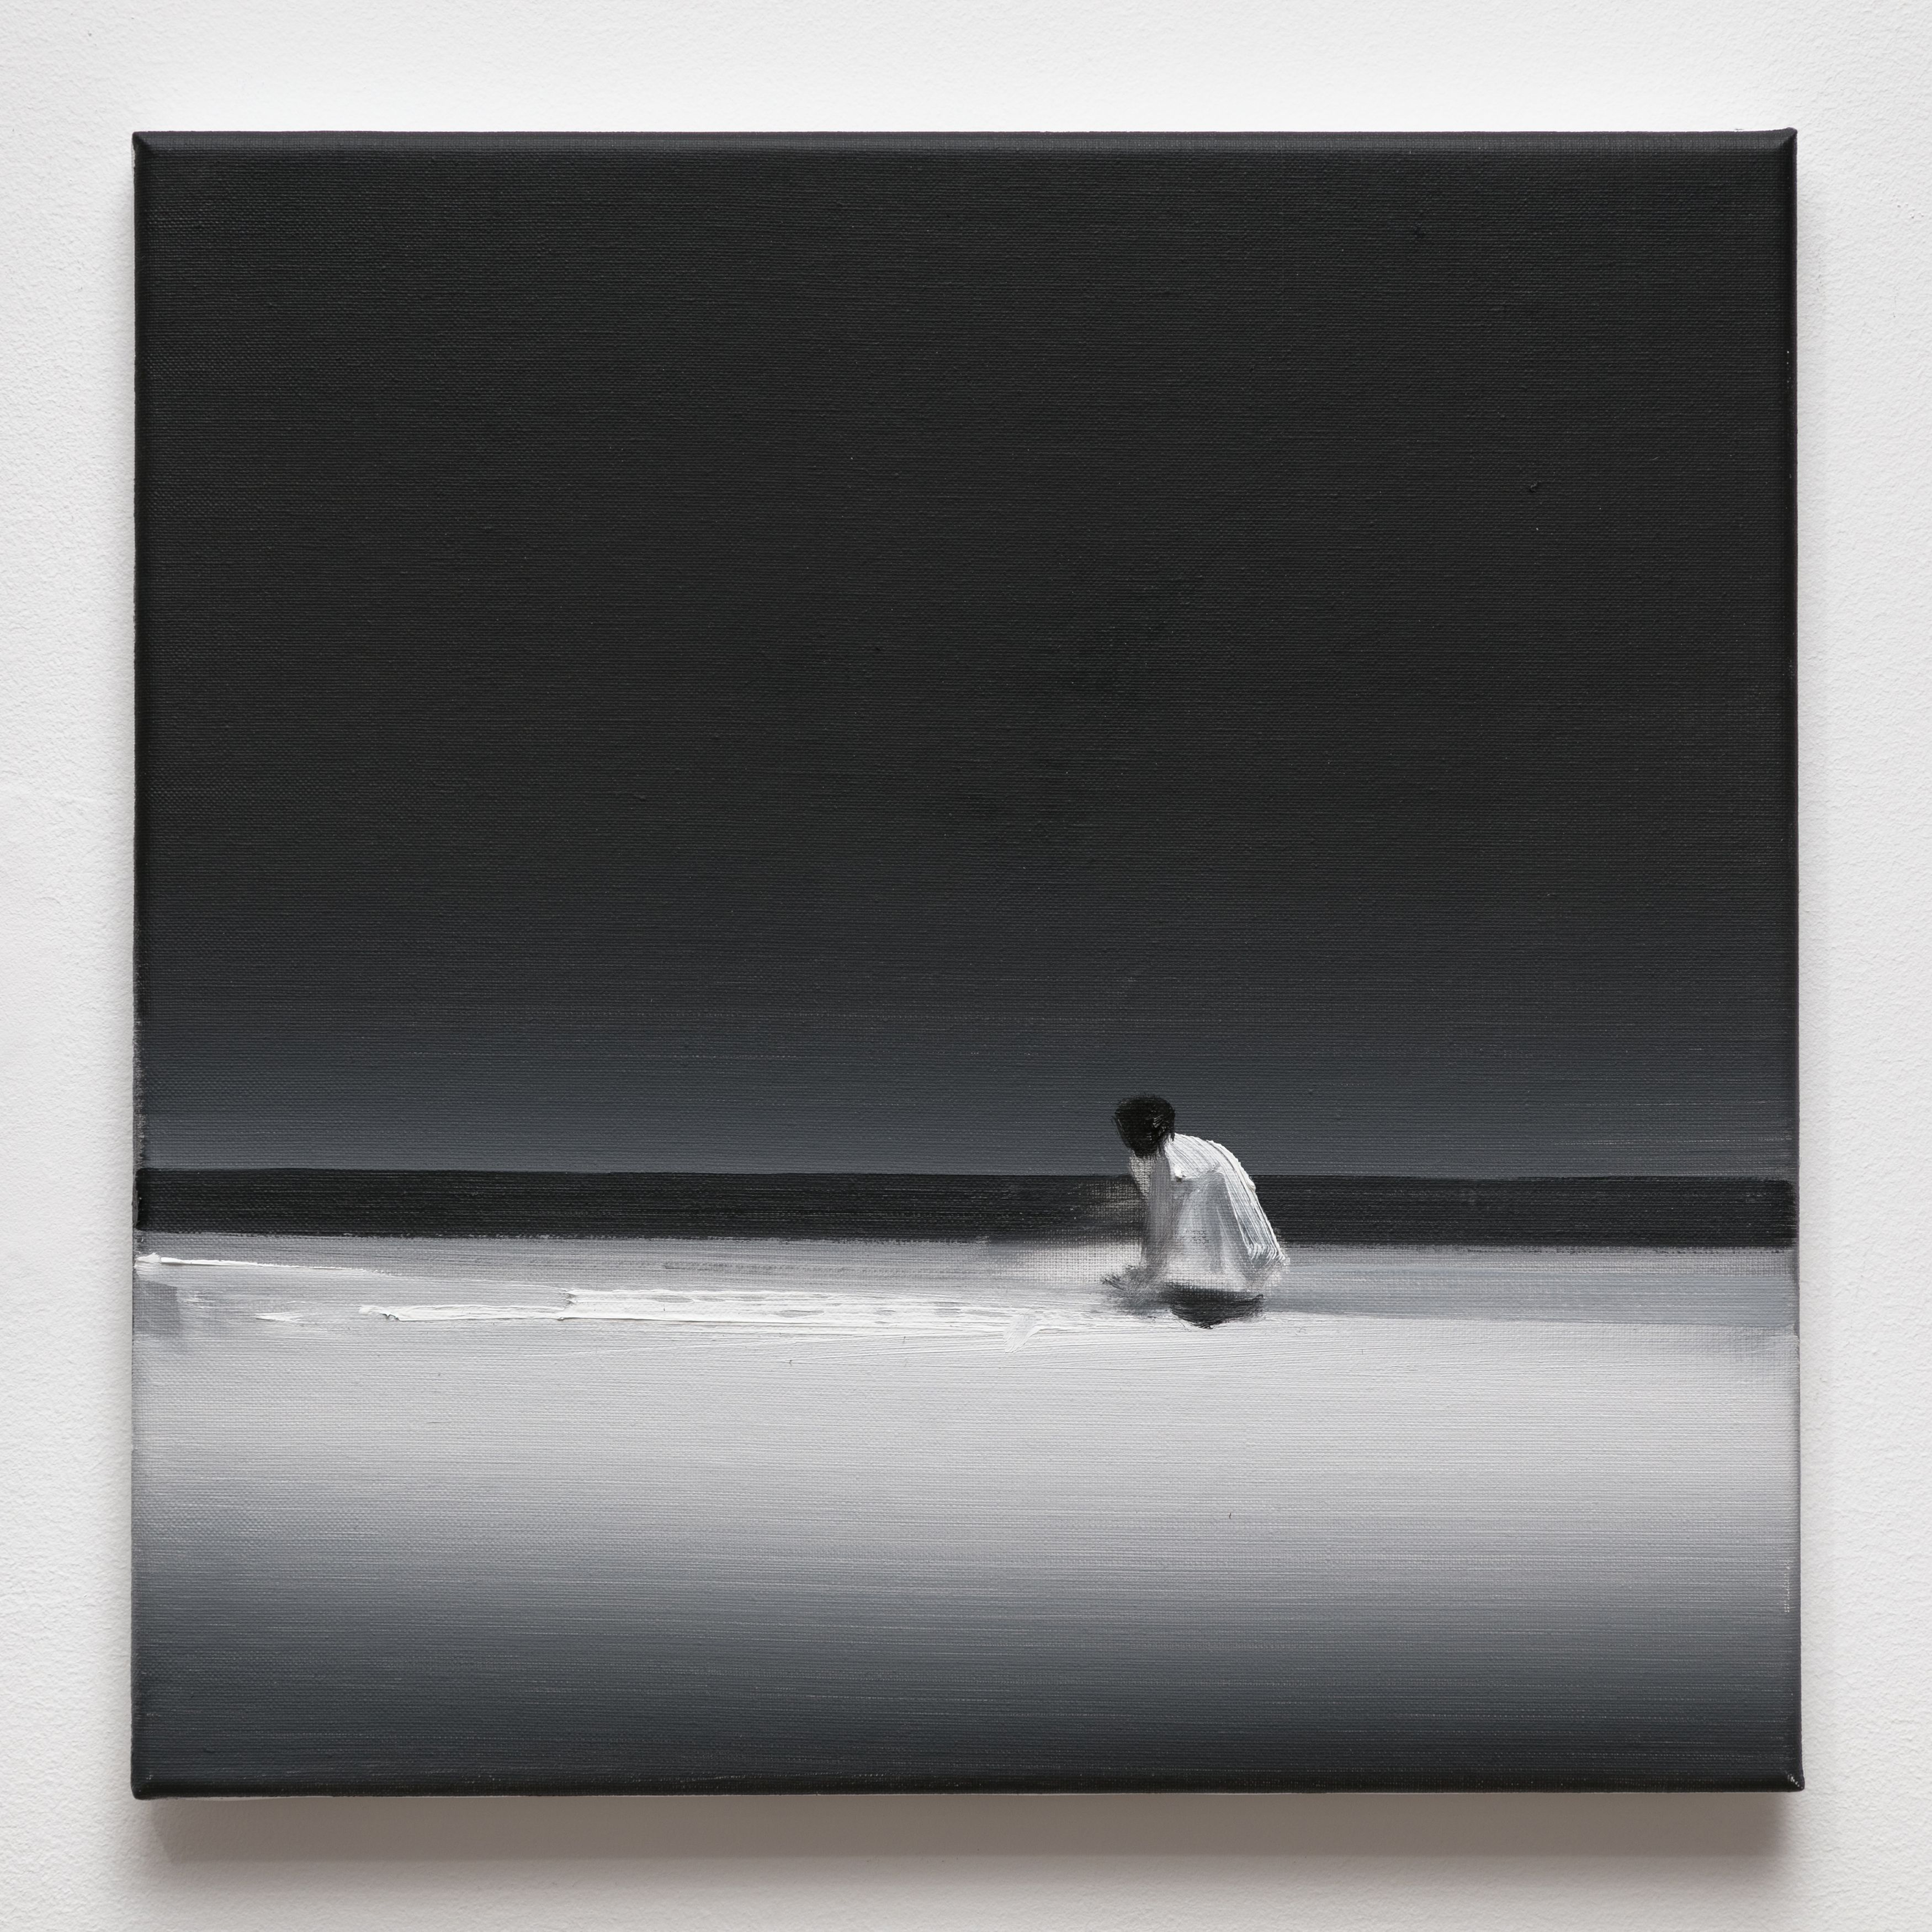 Rafal Bujnowski, The Last Day of Summer, 2019, oil on canvas, 18 1/8 x 18 1/8 in. (46 x 46 cm), RB_FP4136